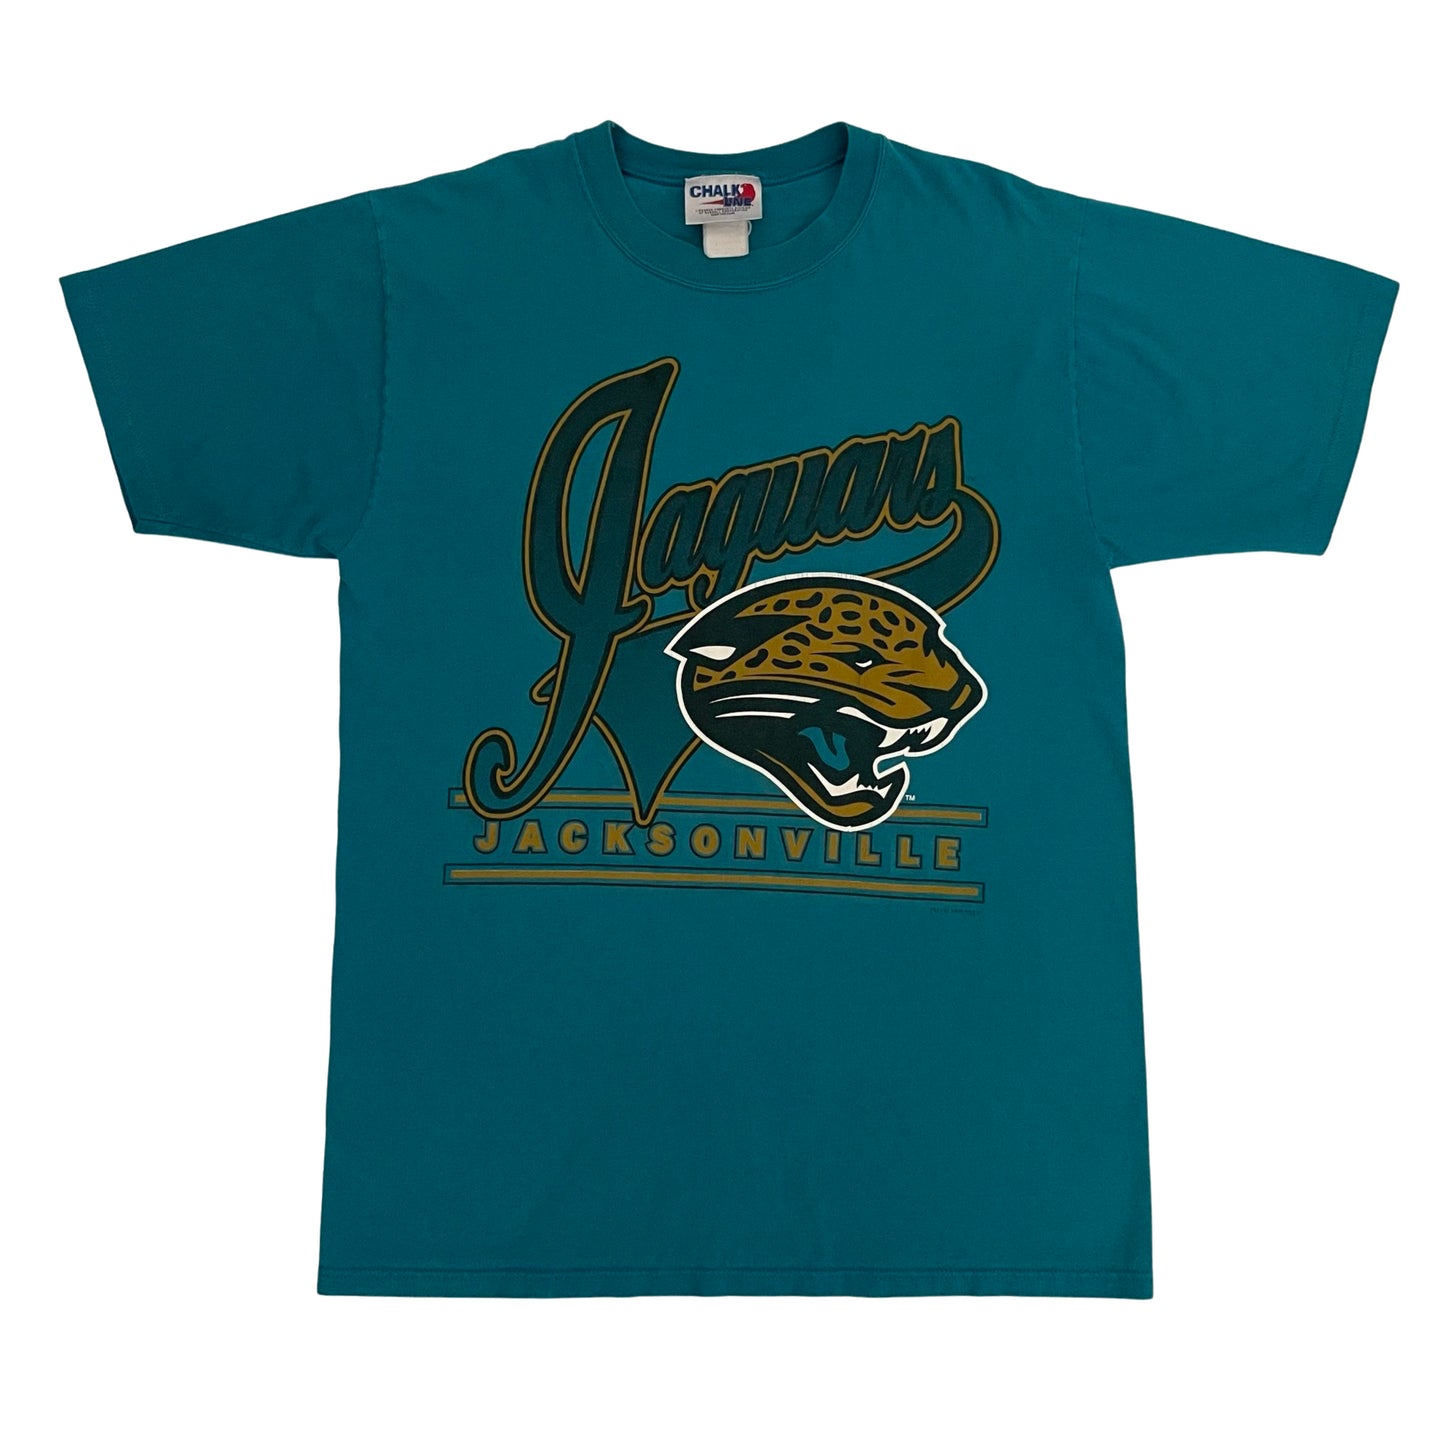 Vintage Jacksonville Jaguars 1995 shirt size MEDIUM